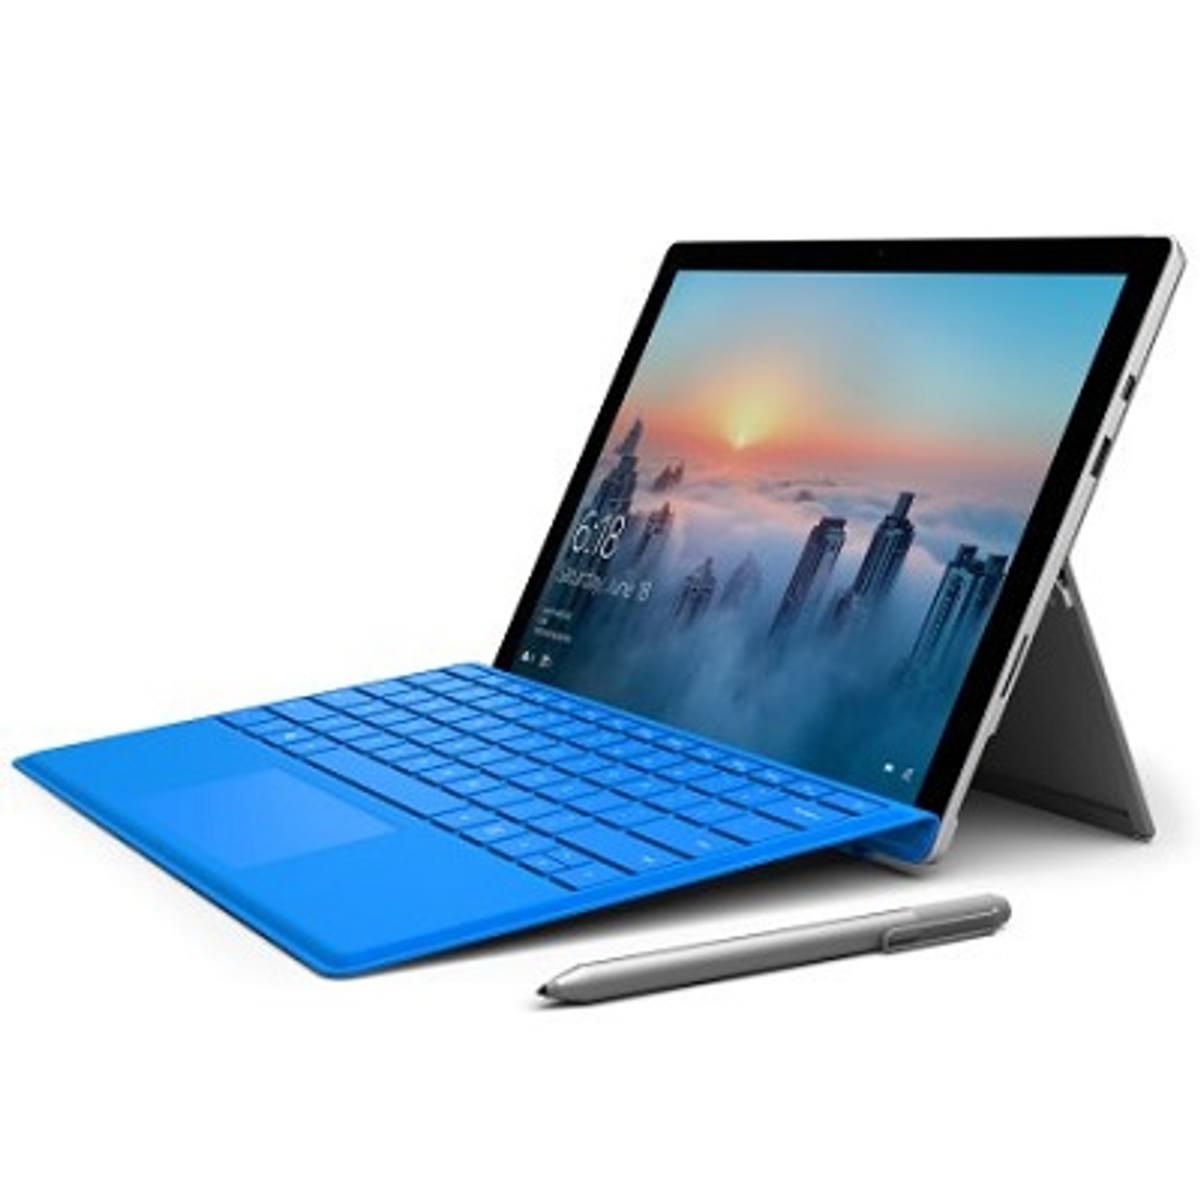 Microsoft memo belicht gedoe rond Surface Book en de Pro 4 image